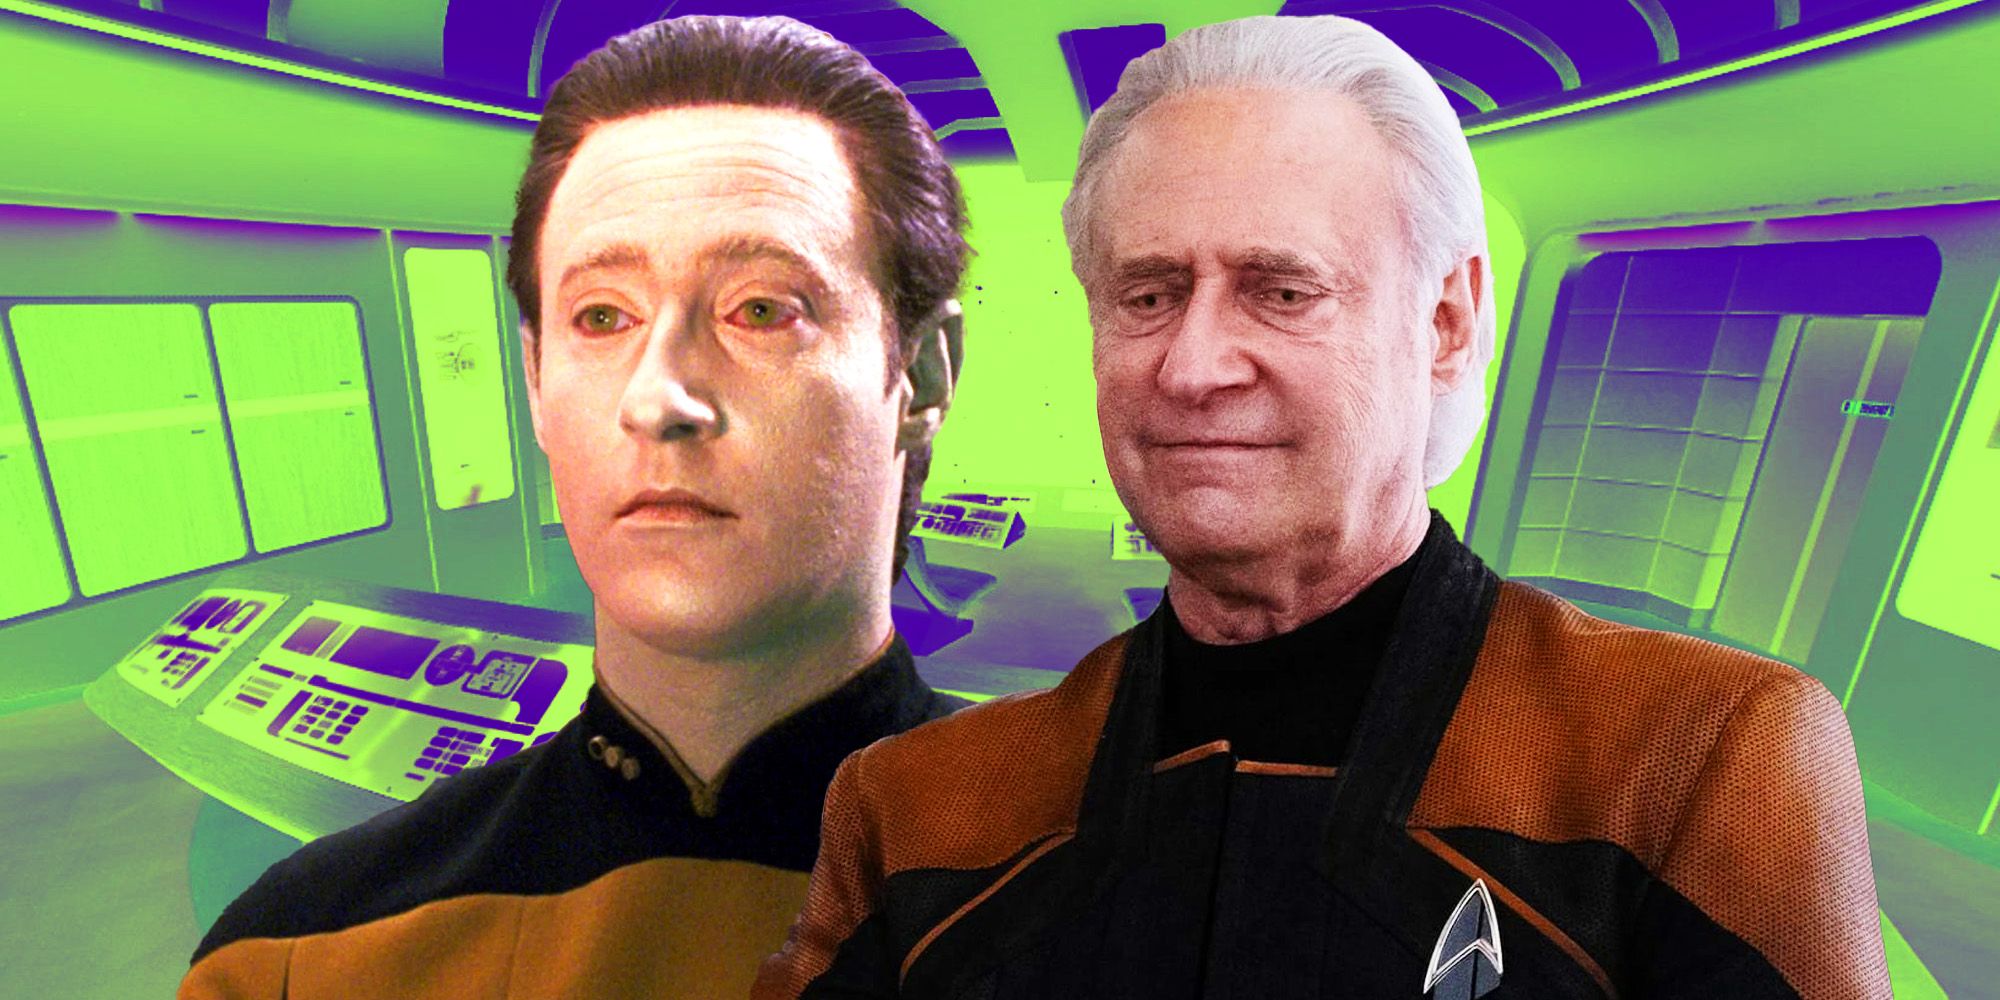 El concepto de datos TNG de Star Trek de Roddenberry se cumplió en la temporada 3 de Picard